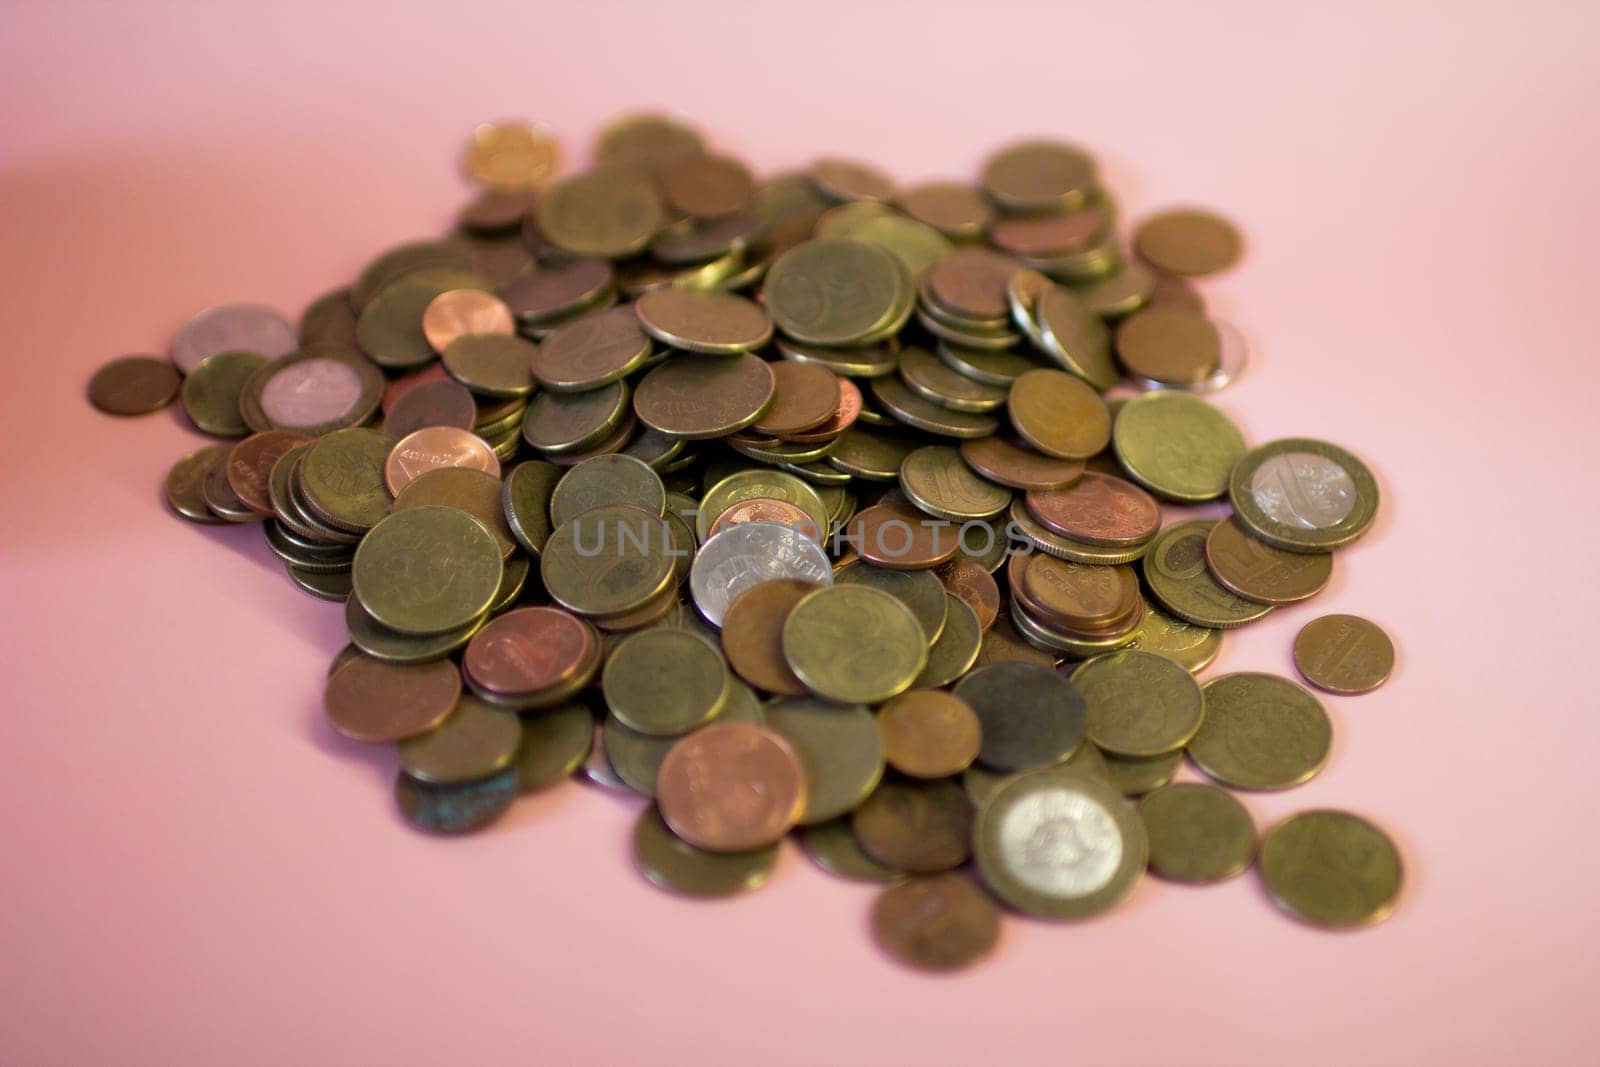 A bunch of belarussian coins by VeronikaAngo